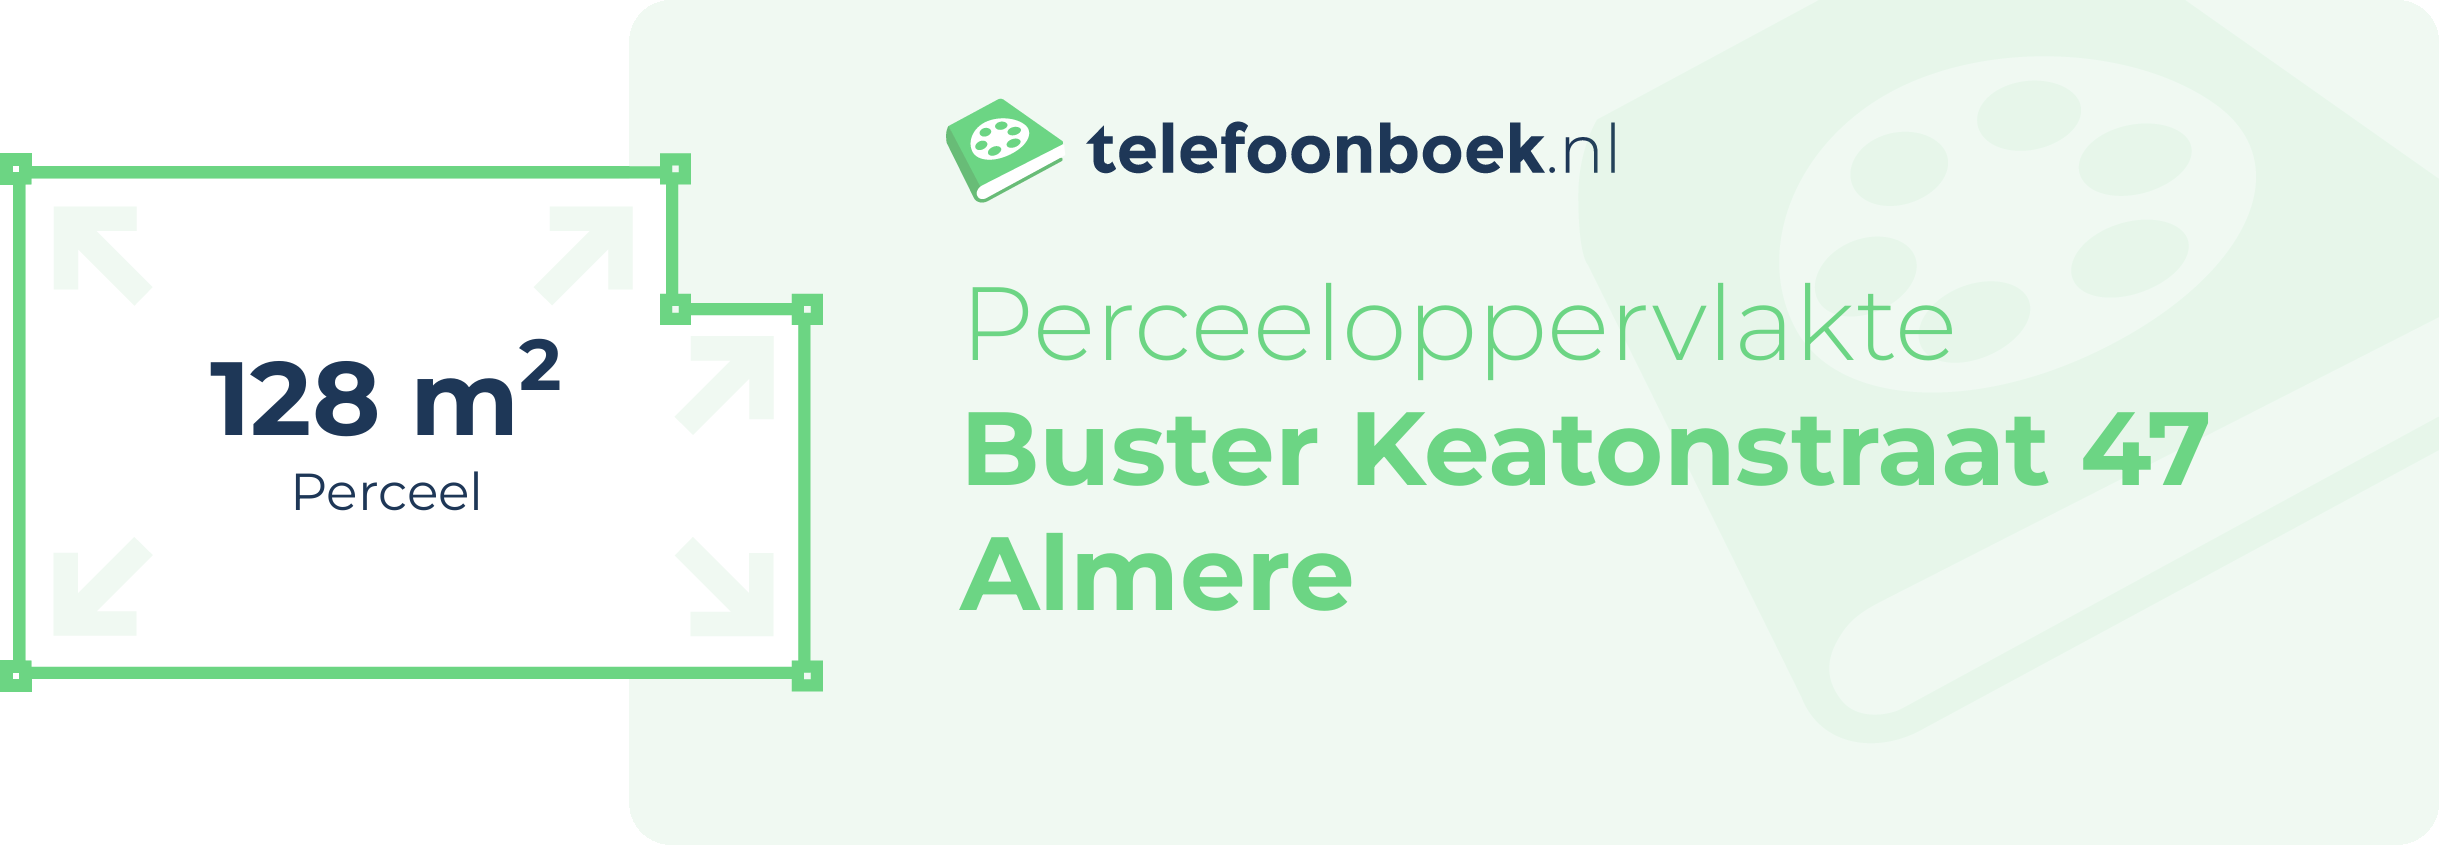 Perceeloppervlakte Buster Keatonstraat 47 Almere